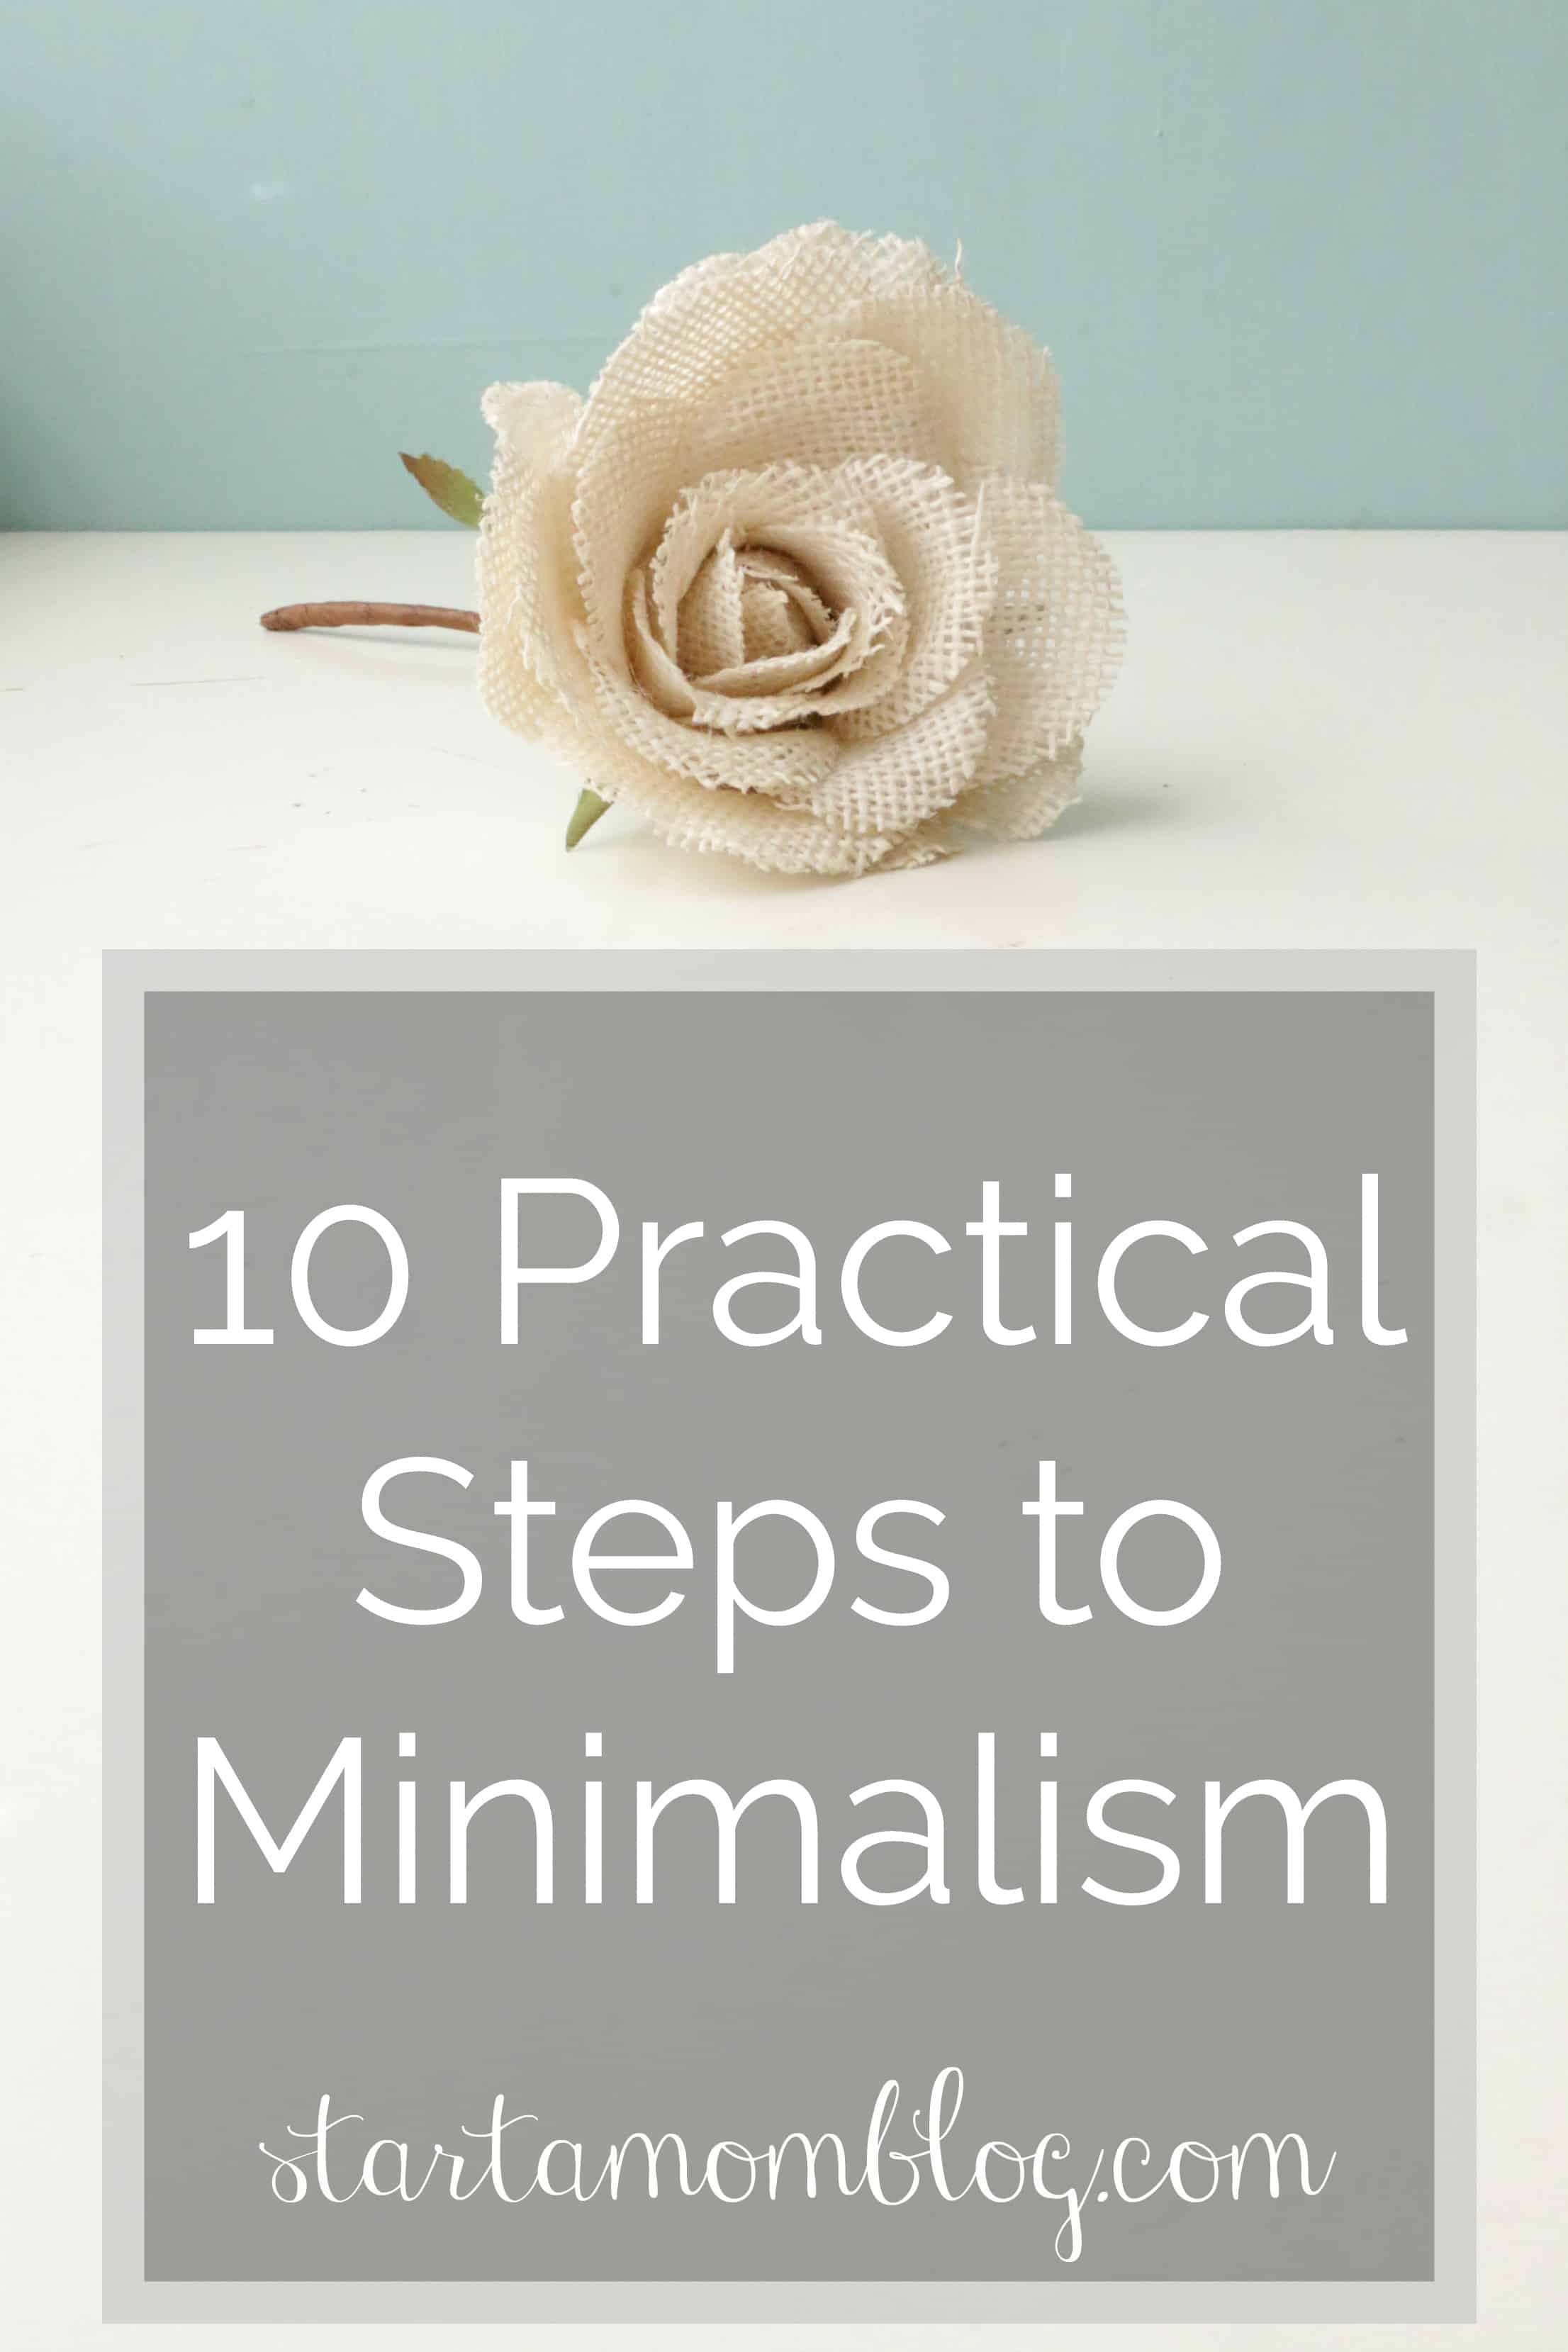 10 Practical Steps to Minimalism www.startamomblog.com